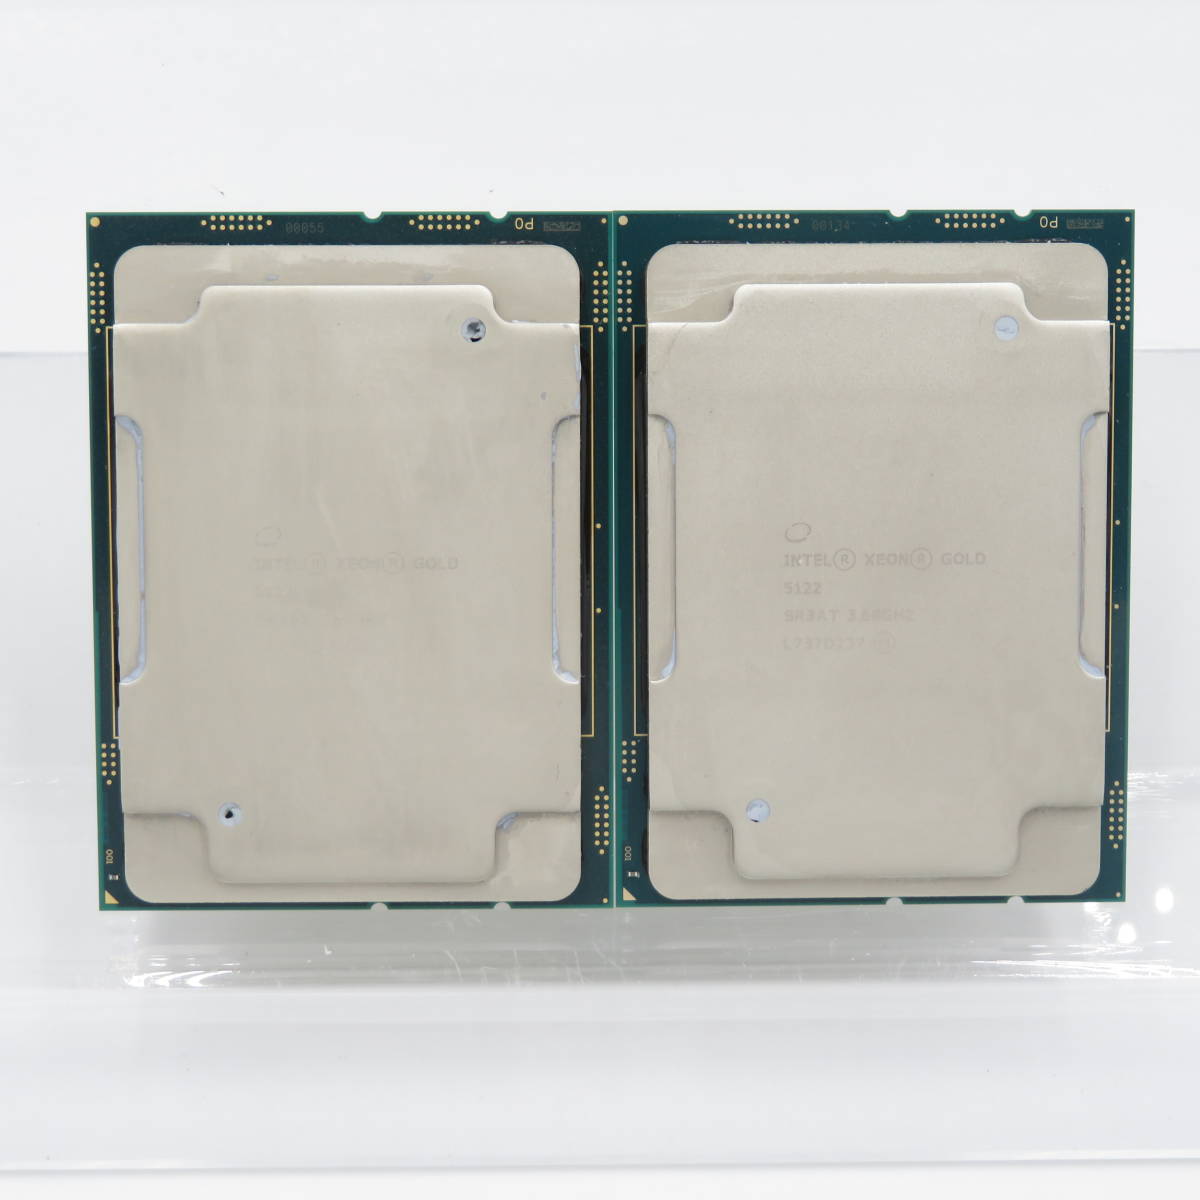 Intel Xeon GOLD 5122 SR3AT 2個セット 動作確認済みの画像1